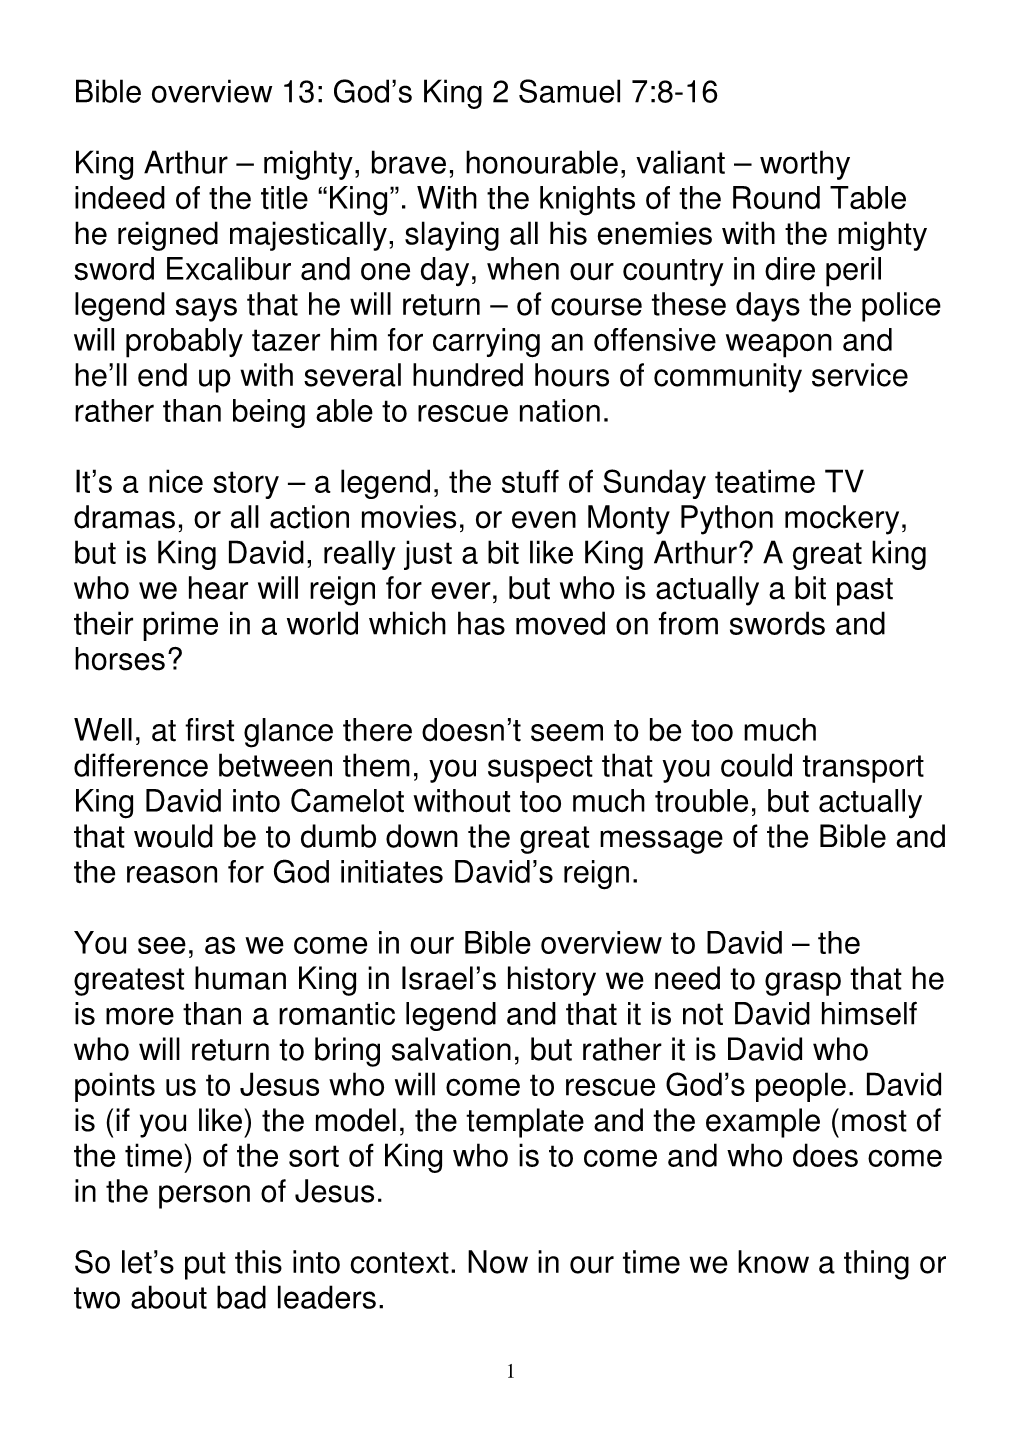 Bible Overview 13: God's King 2 Samuel 7:8-16 King Arthur